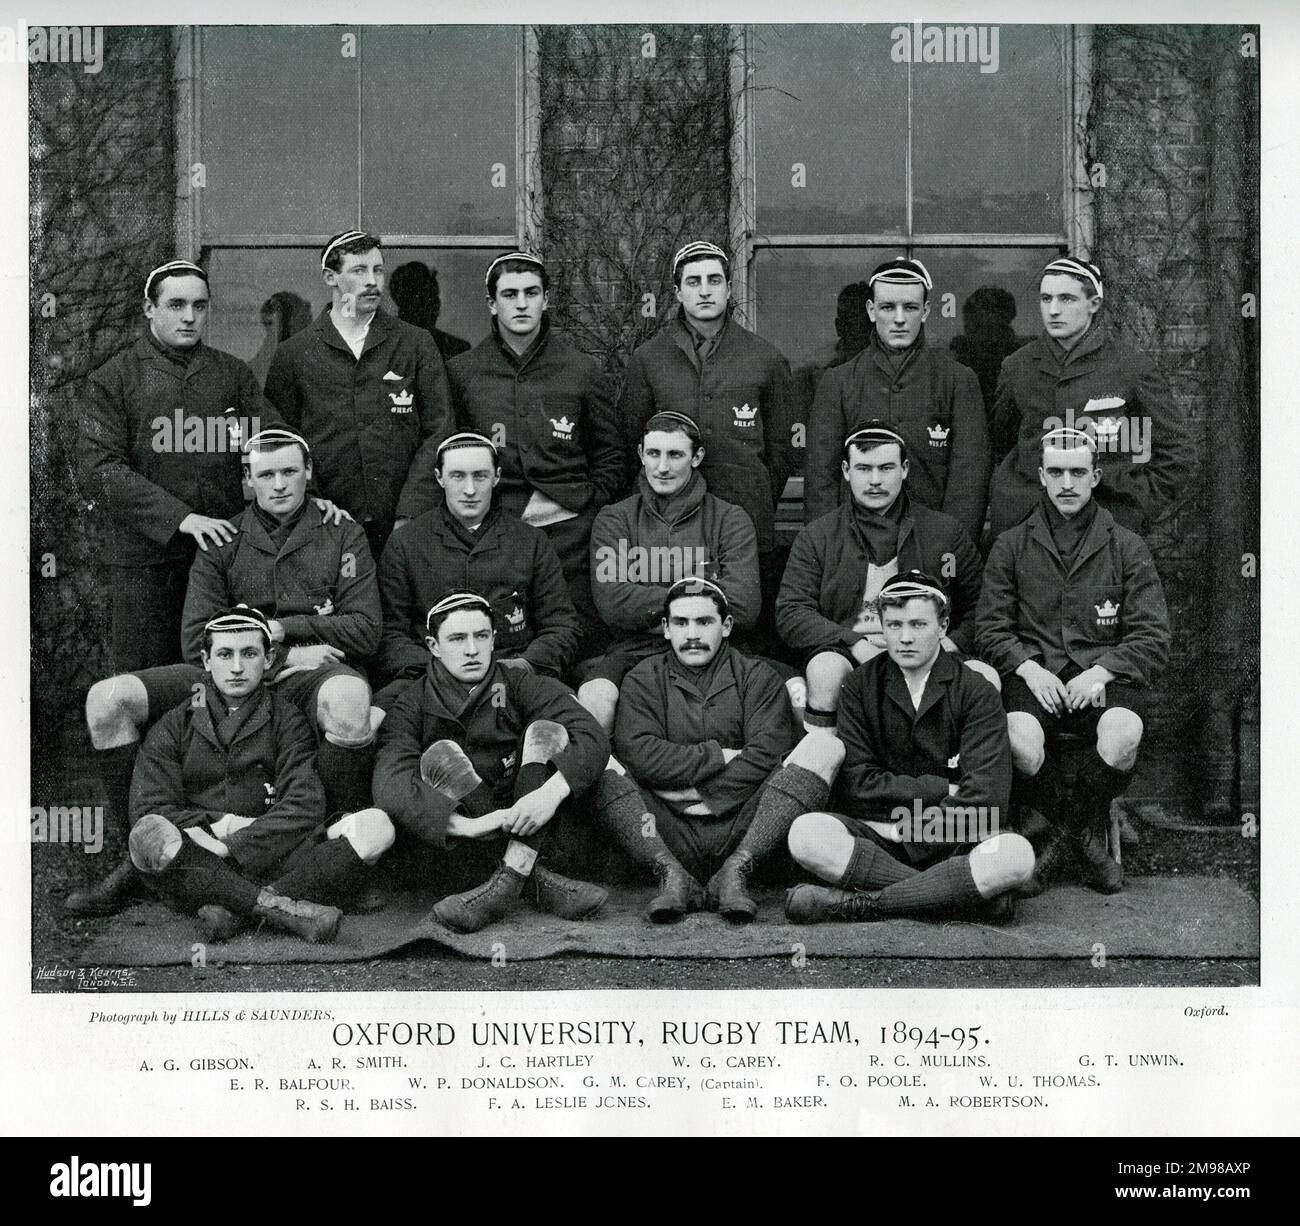 Rugby-Team Der Oxford University, 1894-95: Gibson, Smith, Hartley, Carey, Mullins, Unwin, Balfour, Donaldson, Carey (Kapitän), Poole, Thomas, Baiss, Leslie Jones, Baker, Robertson. Stockfoto